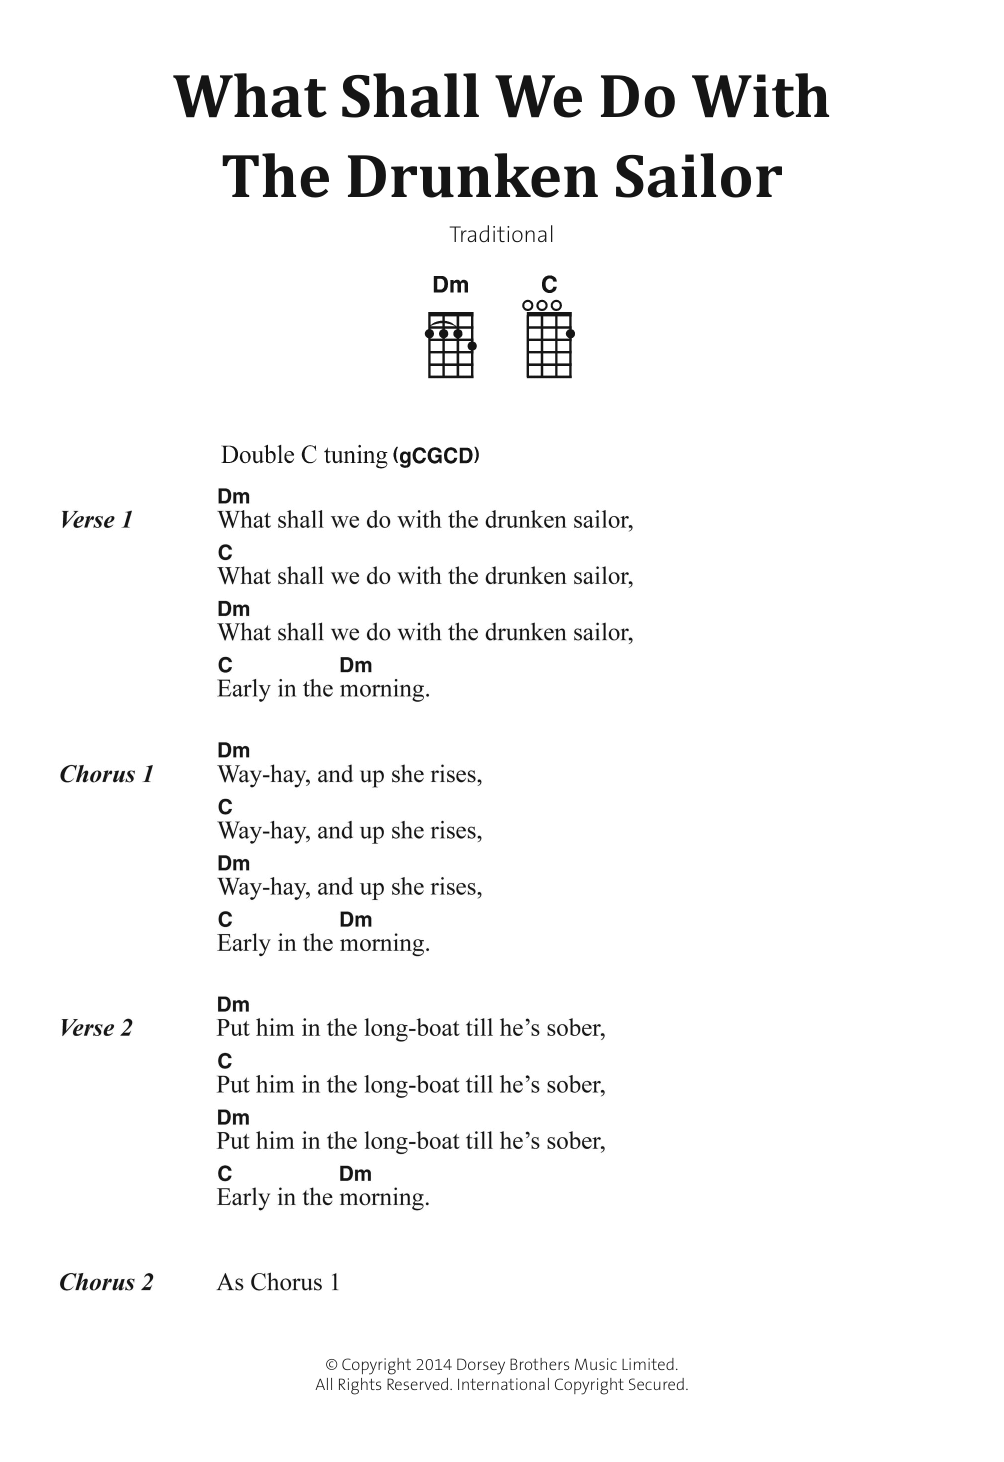 What Shall We Do With The Drunken Sailor (Ukulele Chords/Lyrics) von Traditional